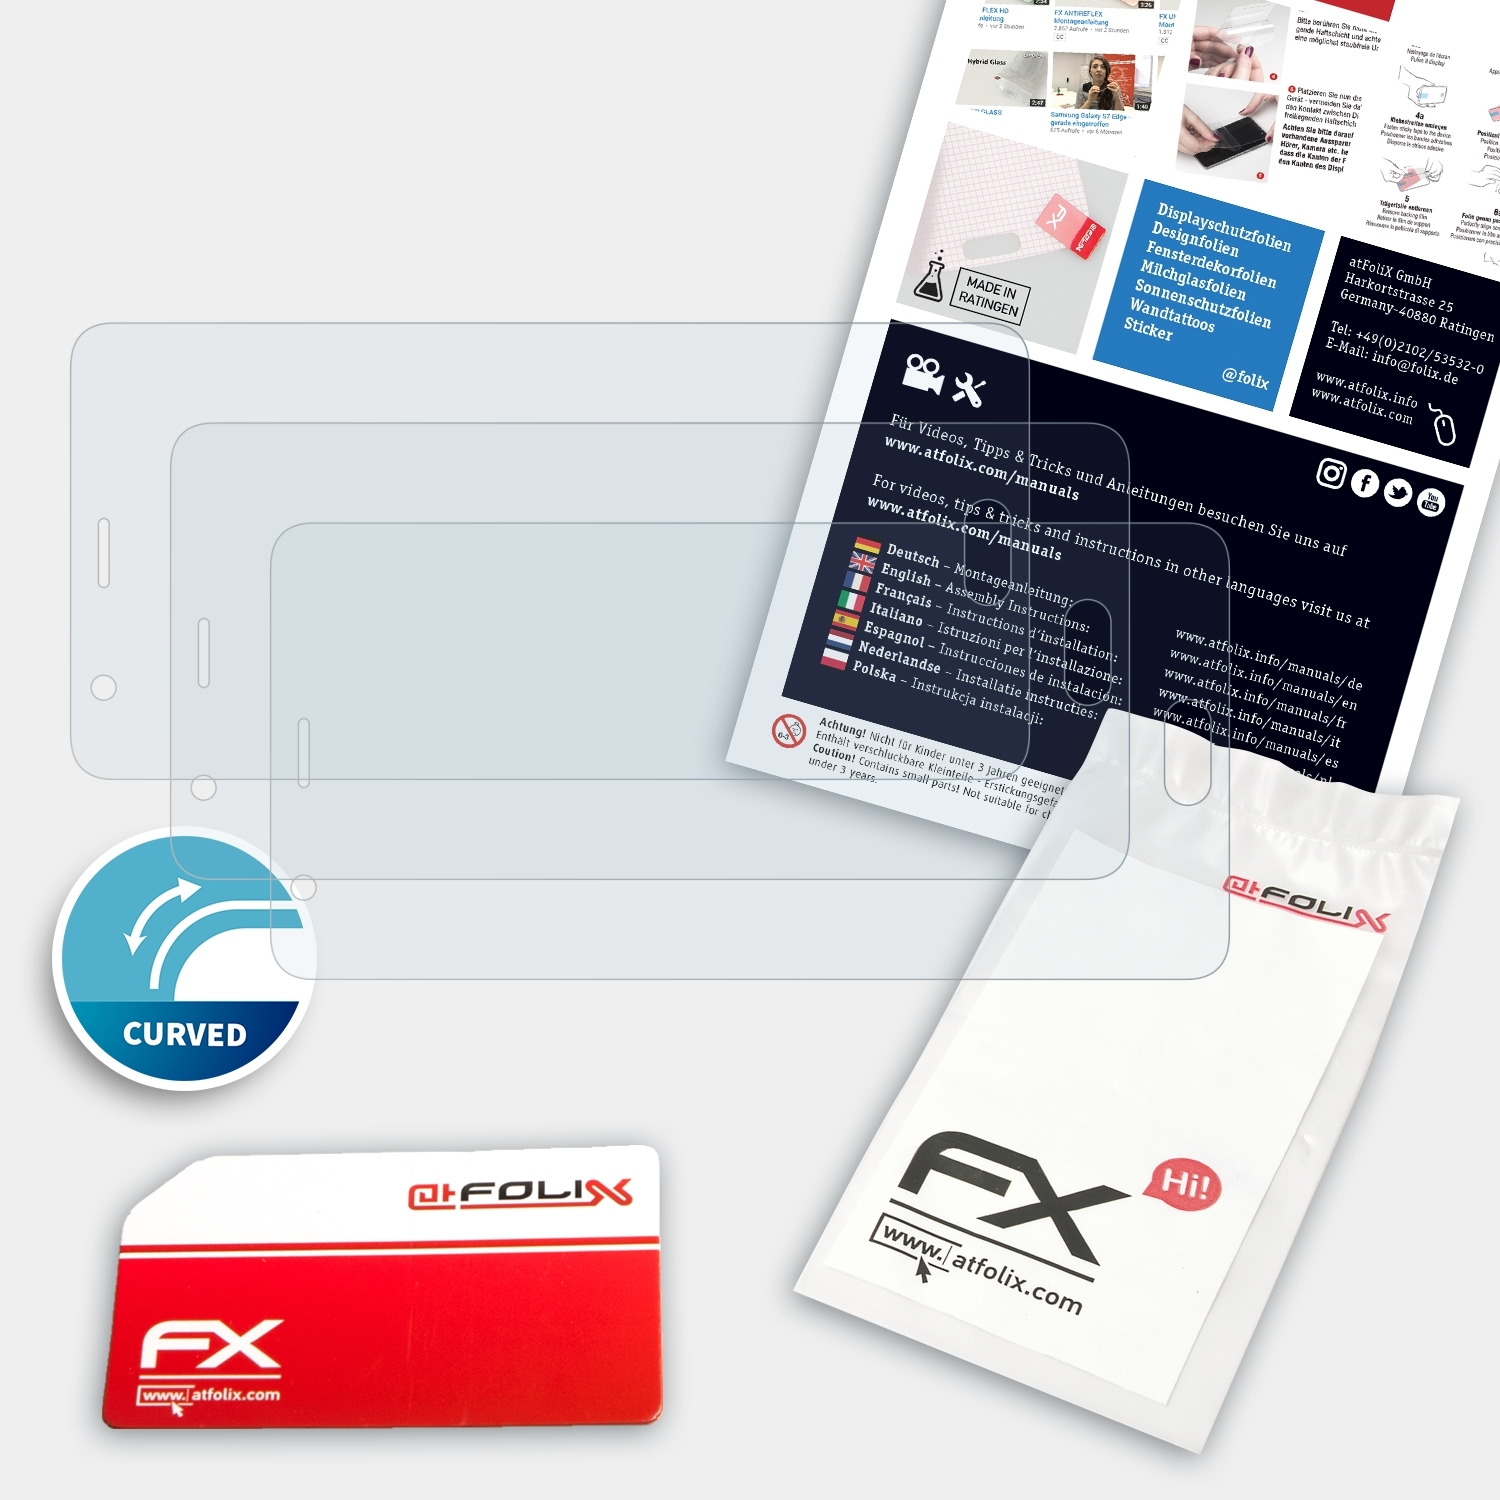 ATFOLIX 3x FX-ActiFleX Note 4 Infinix Displayschutz(für Pro)